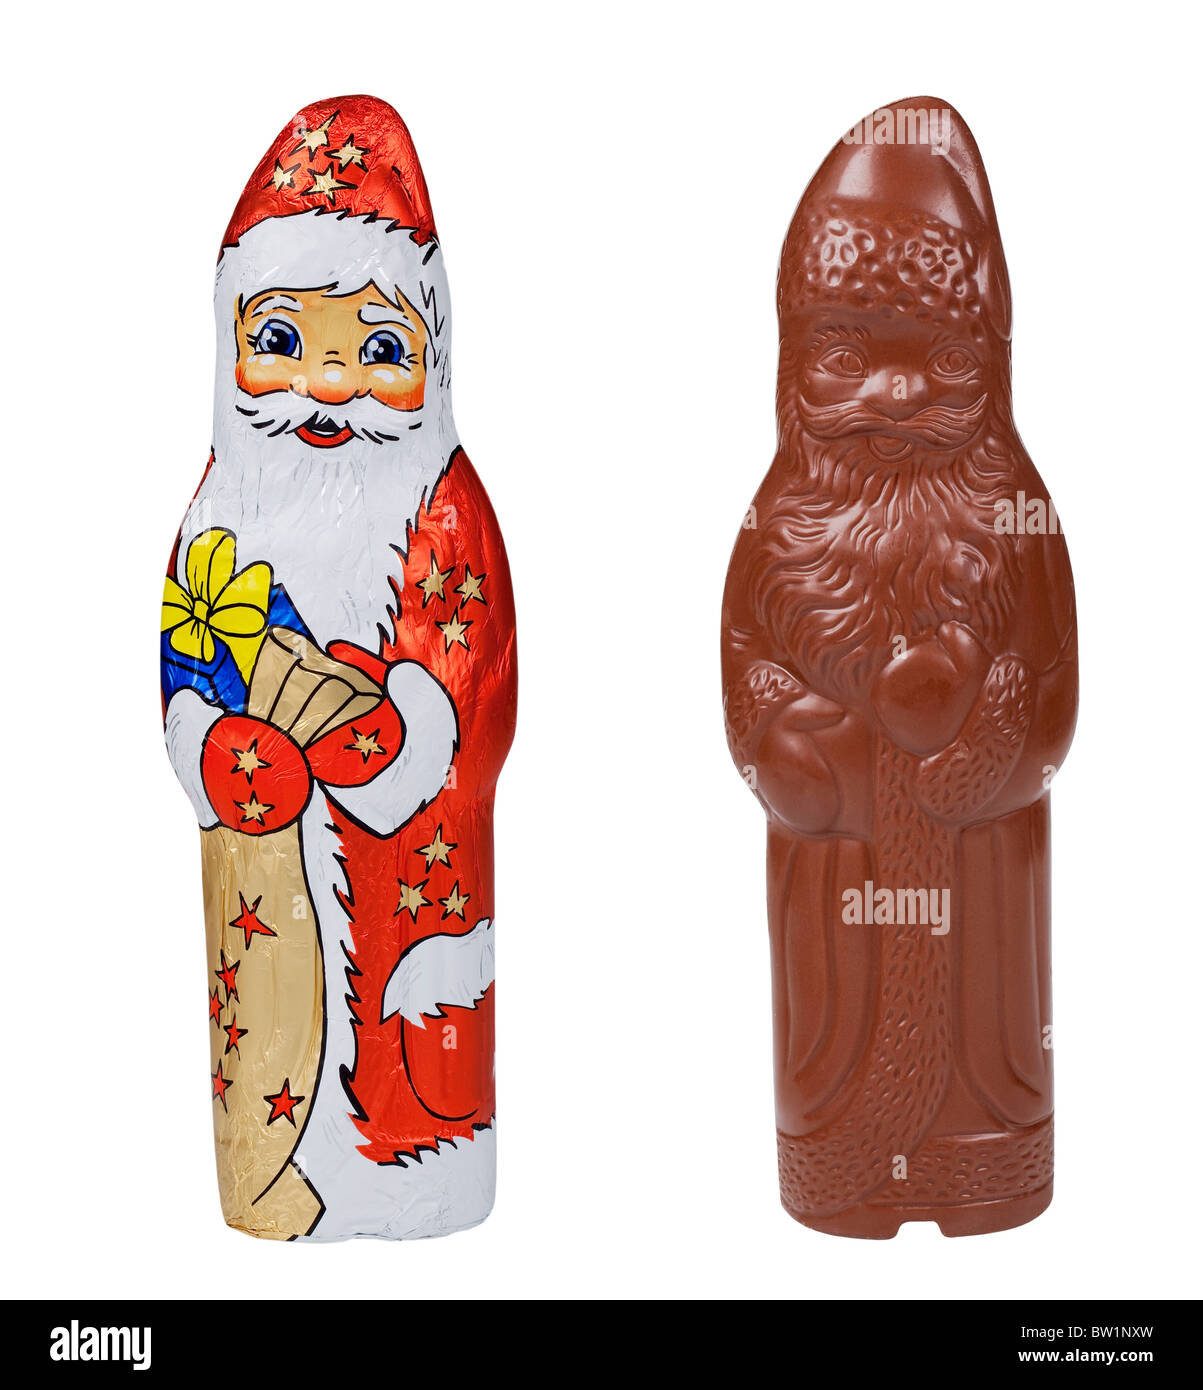 Schokoladenfiguren von St. Nikolaus Stockfoto